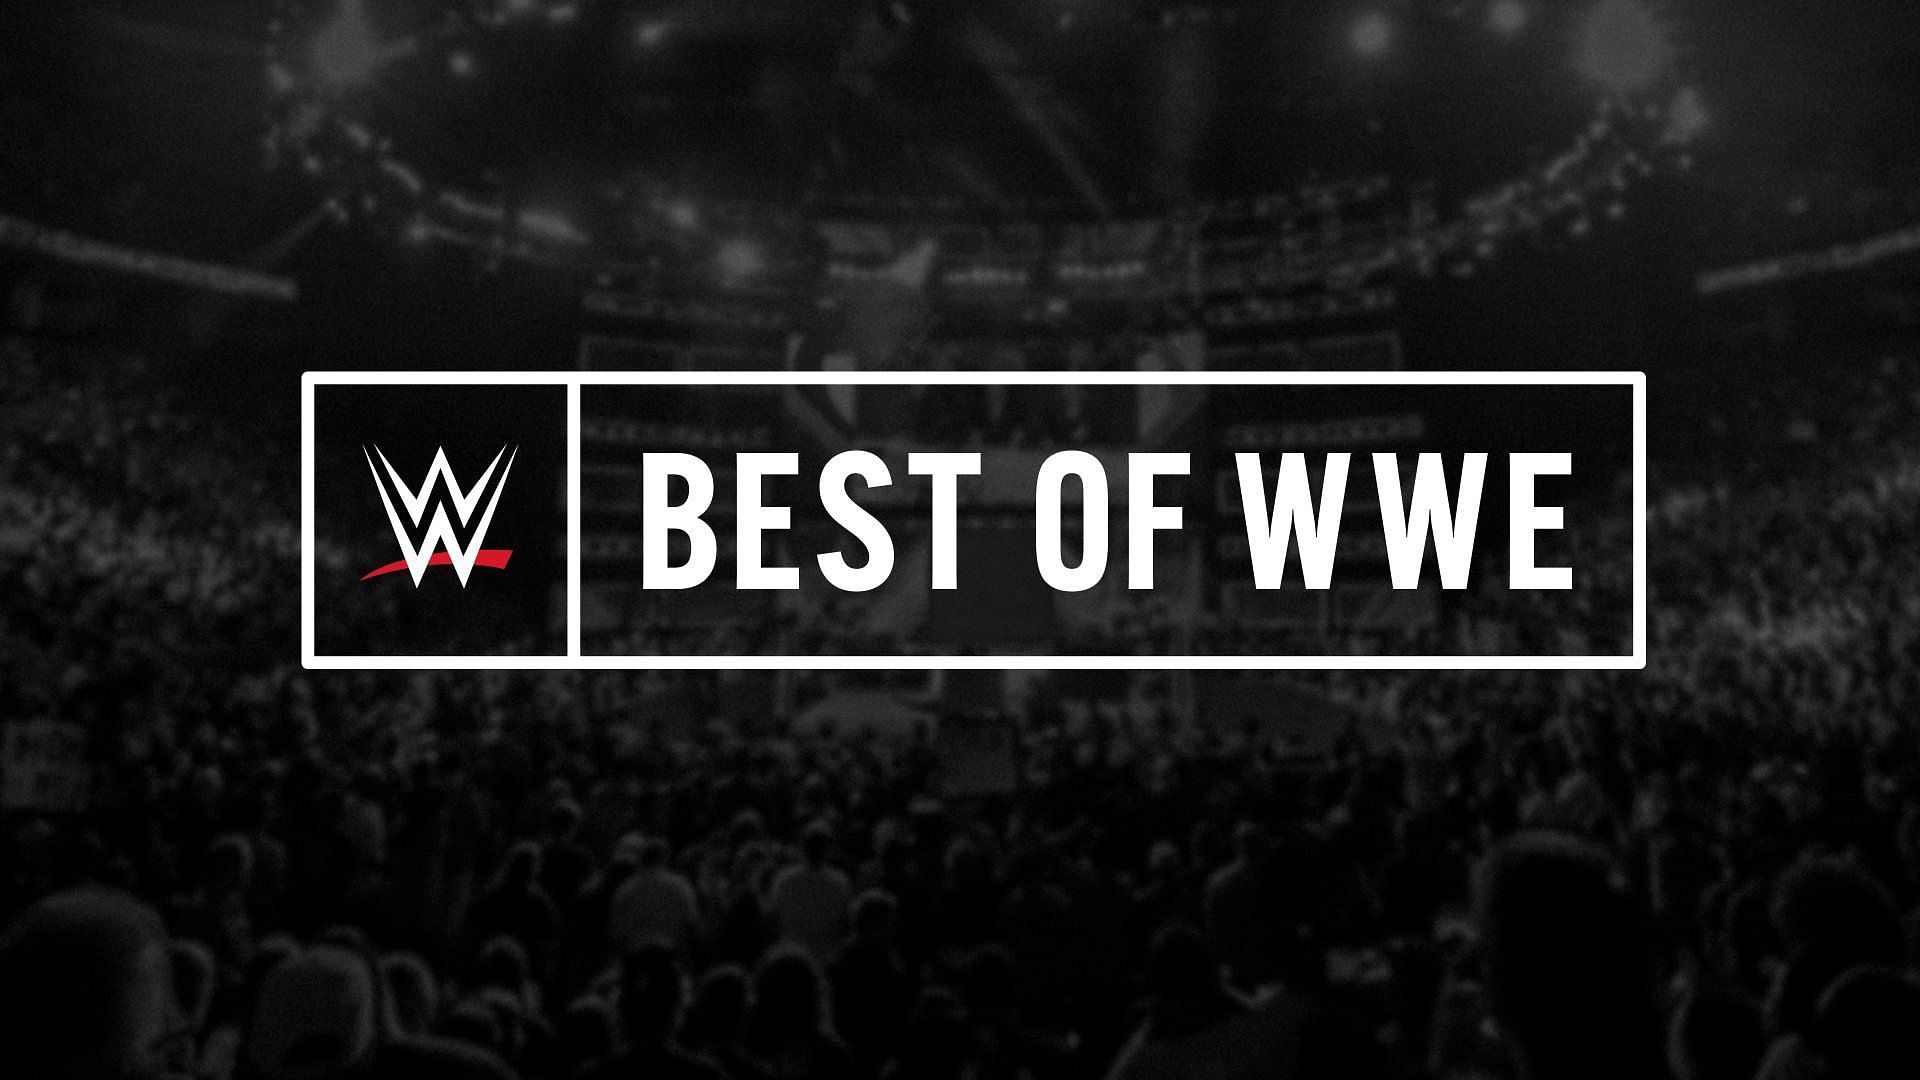 The Best of WWE logo